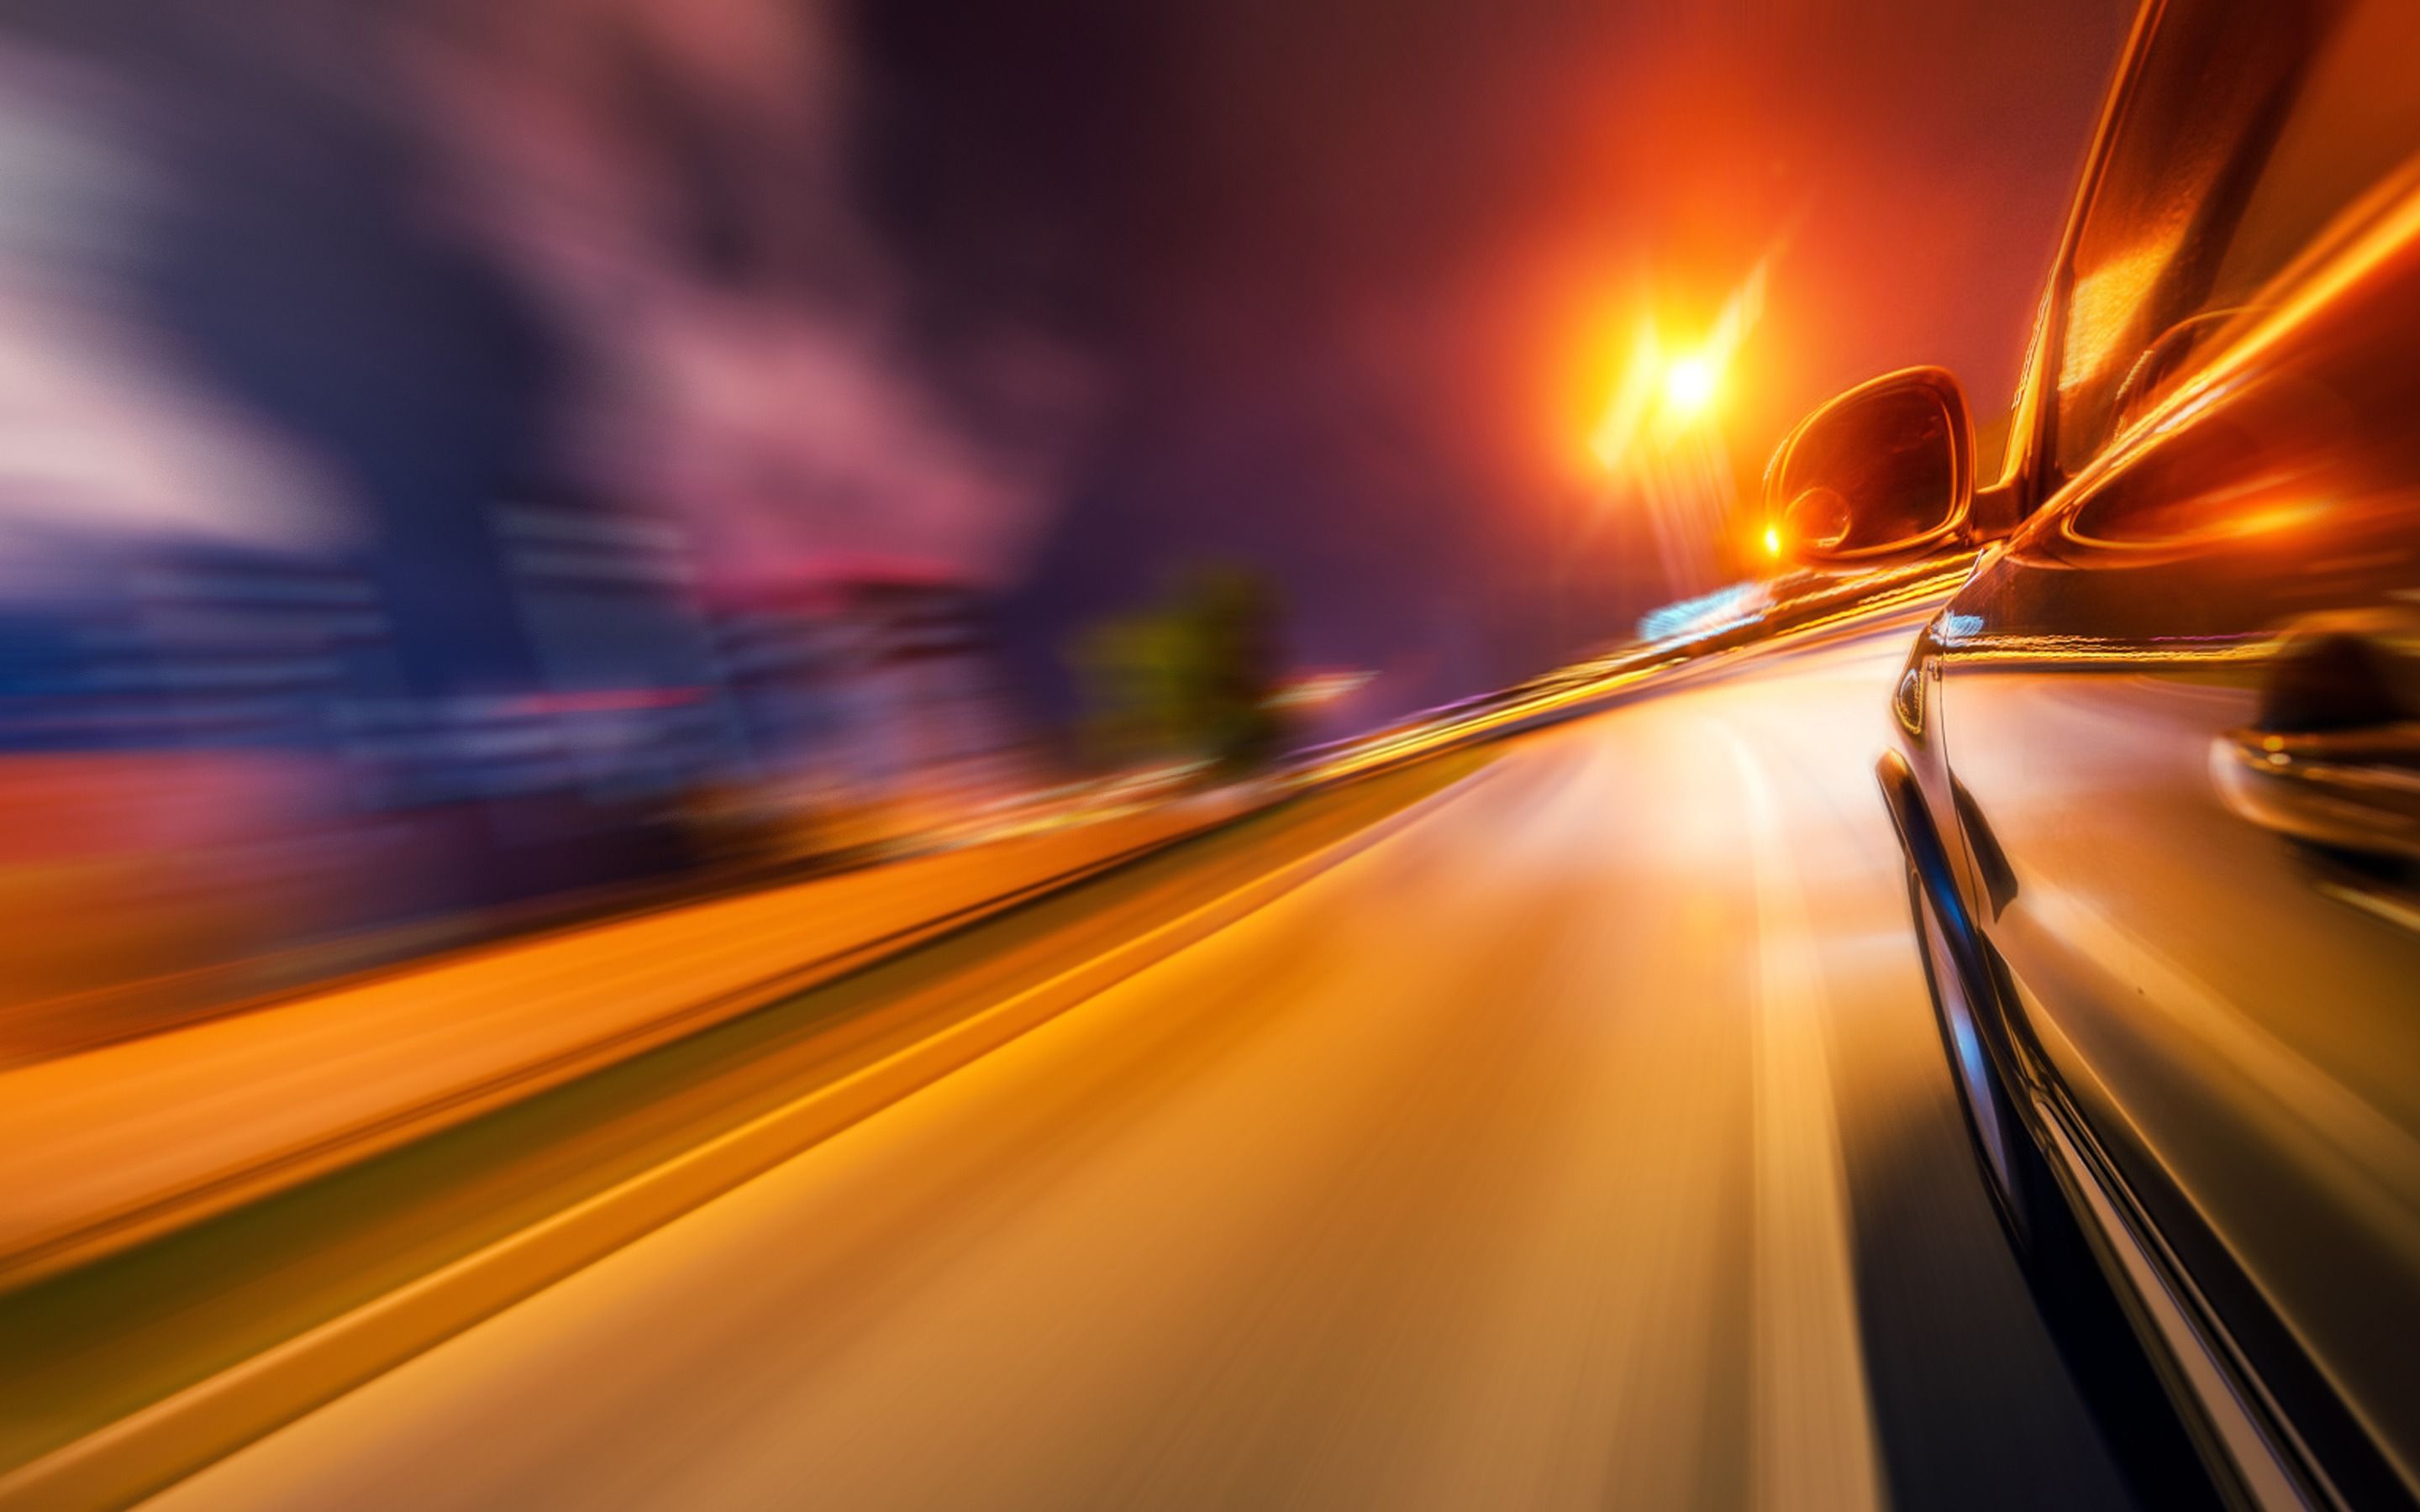 Download wallpaper car driving at night, motion blur, car at